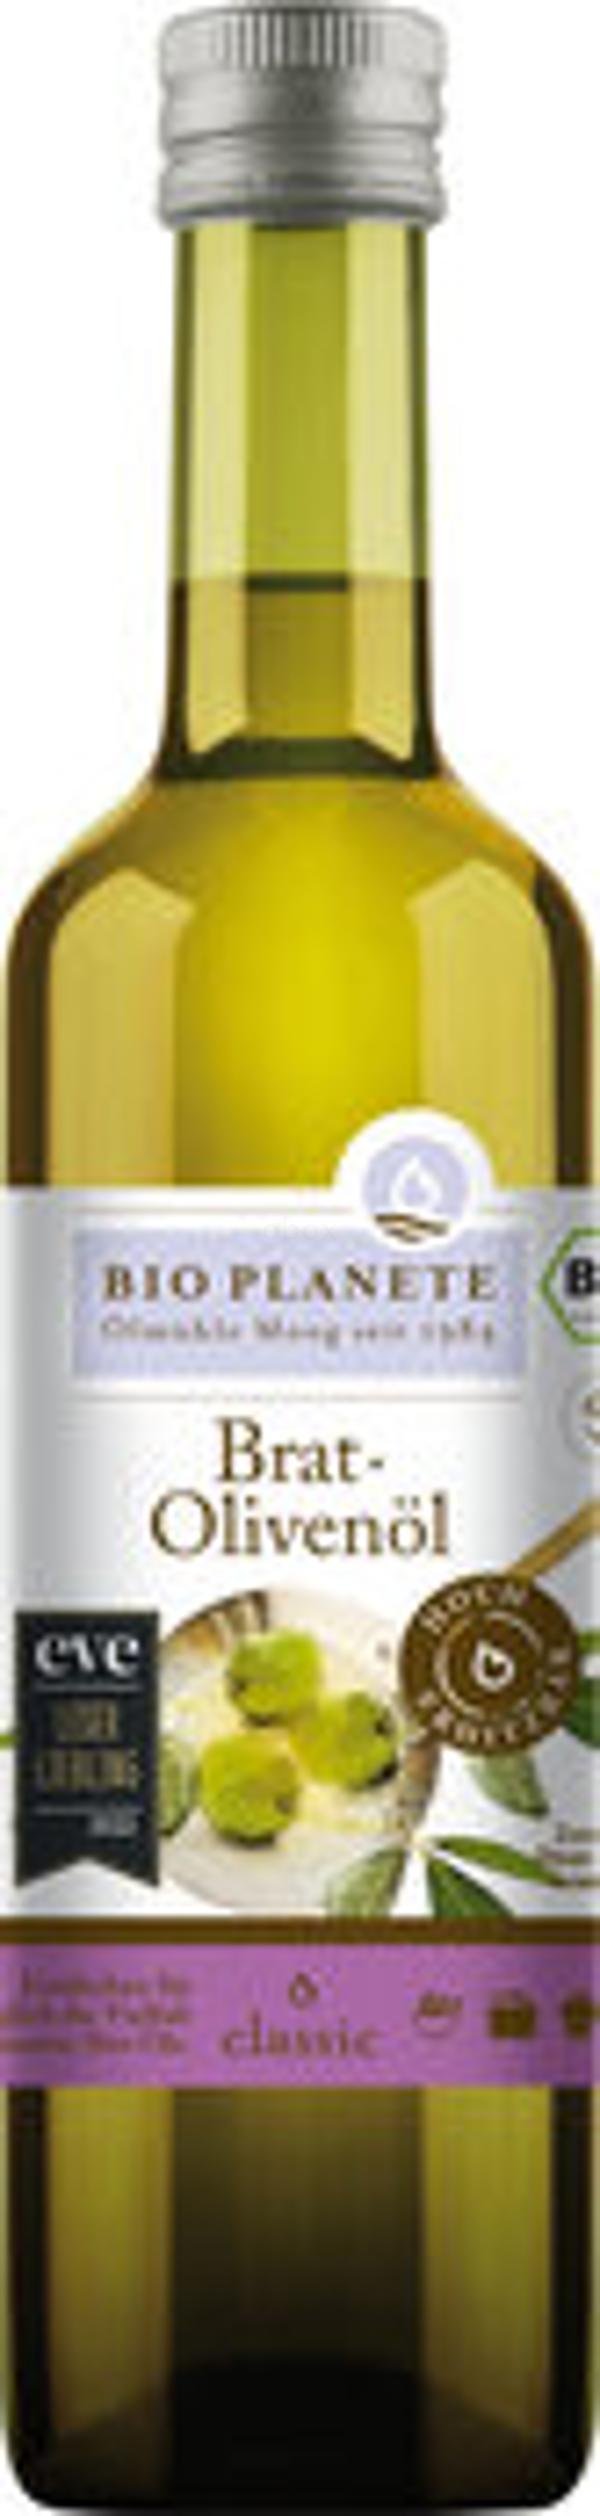 Produktfoto zu Brat Olivenöl 500ml